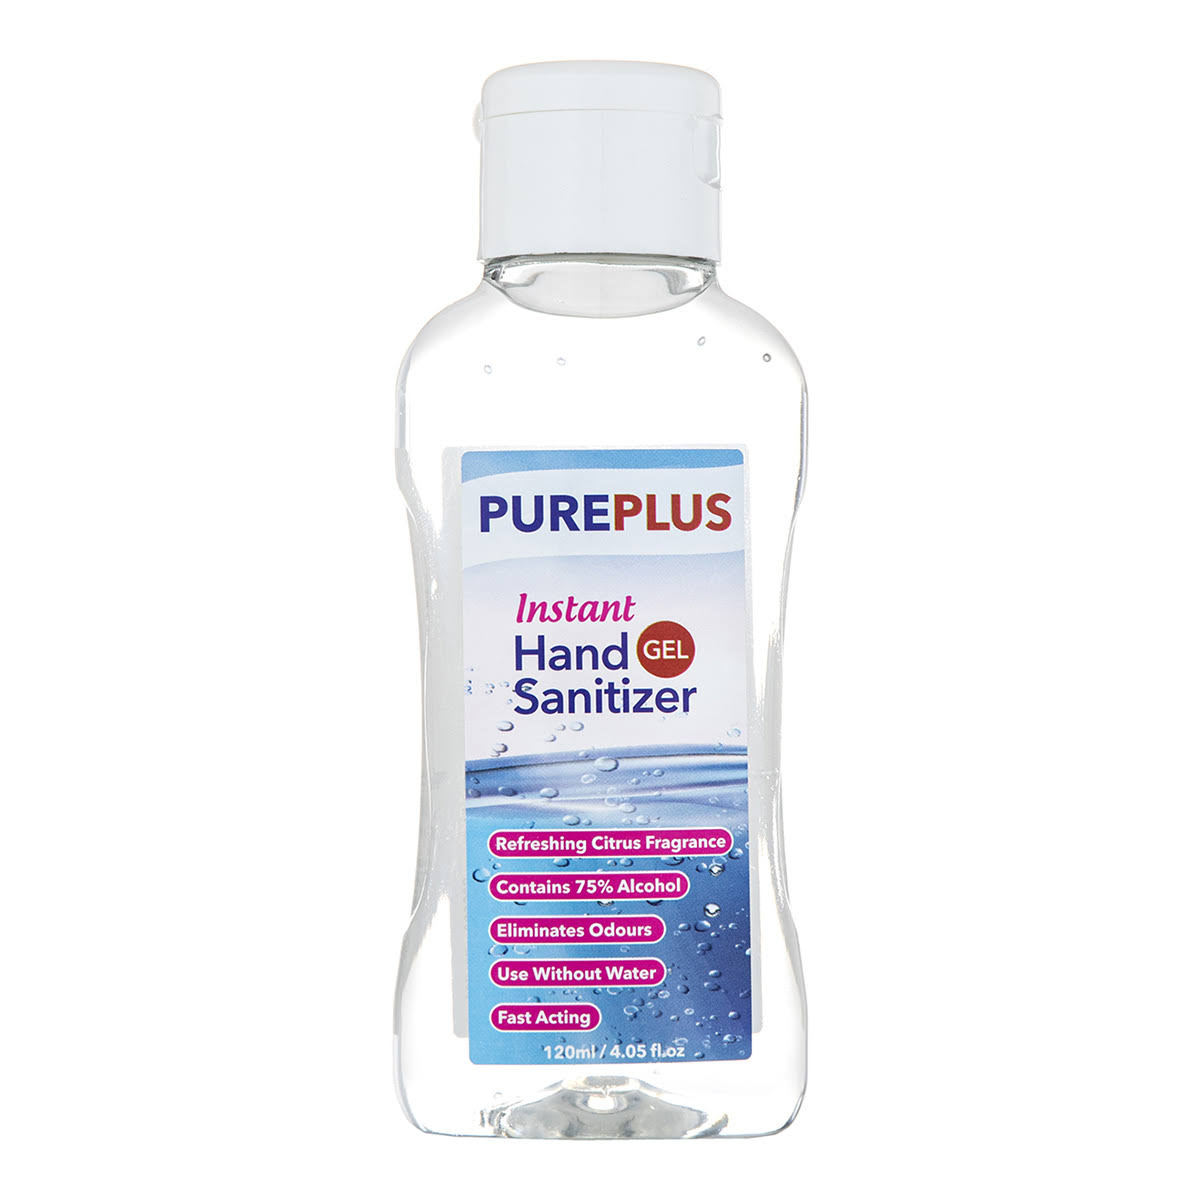 Pureplus Anti-Bacterial Hand Sanitizer 120ml